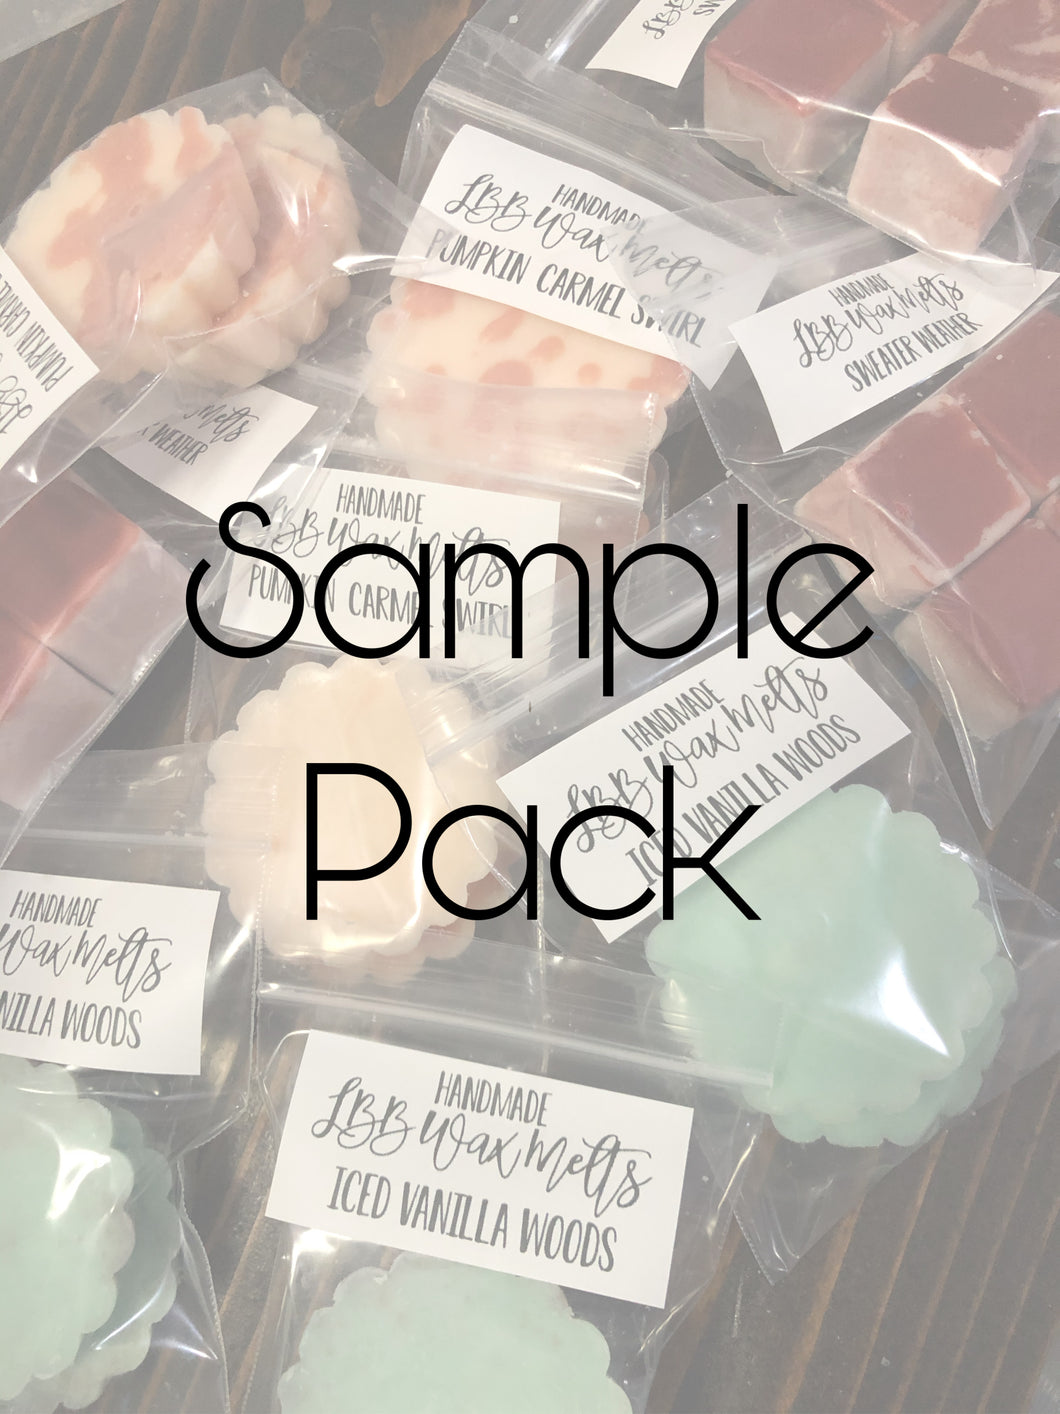 Wax Melt Sample Packs